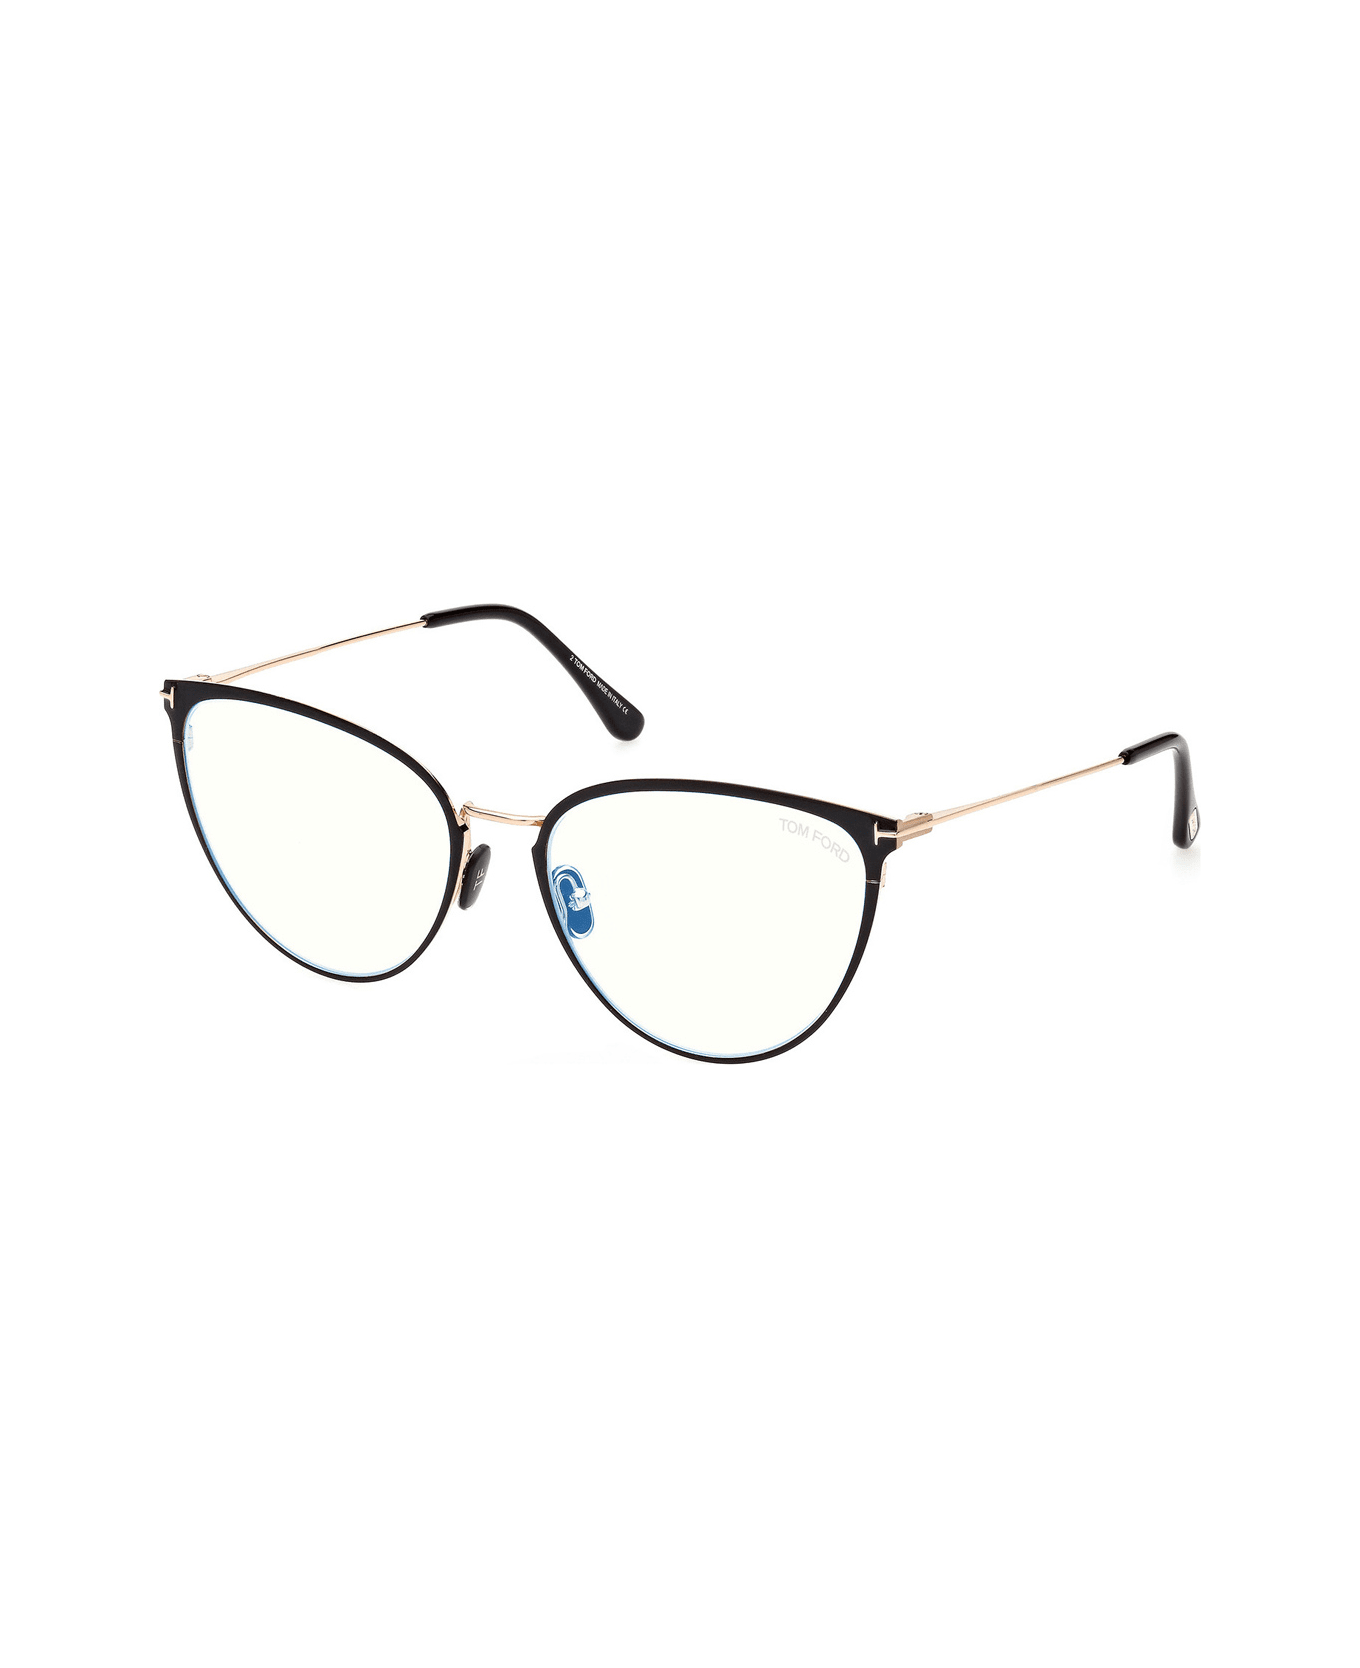 Tom Ford Eyewear Ft5840 001 Glasses - Nero